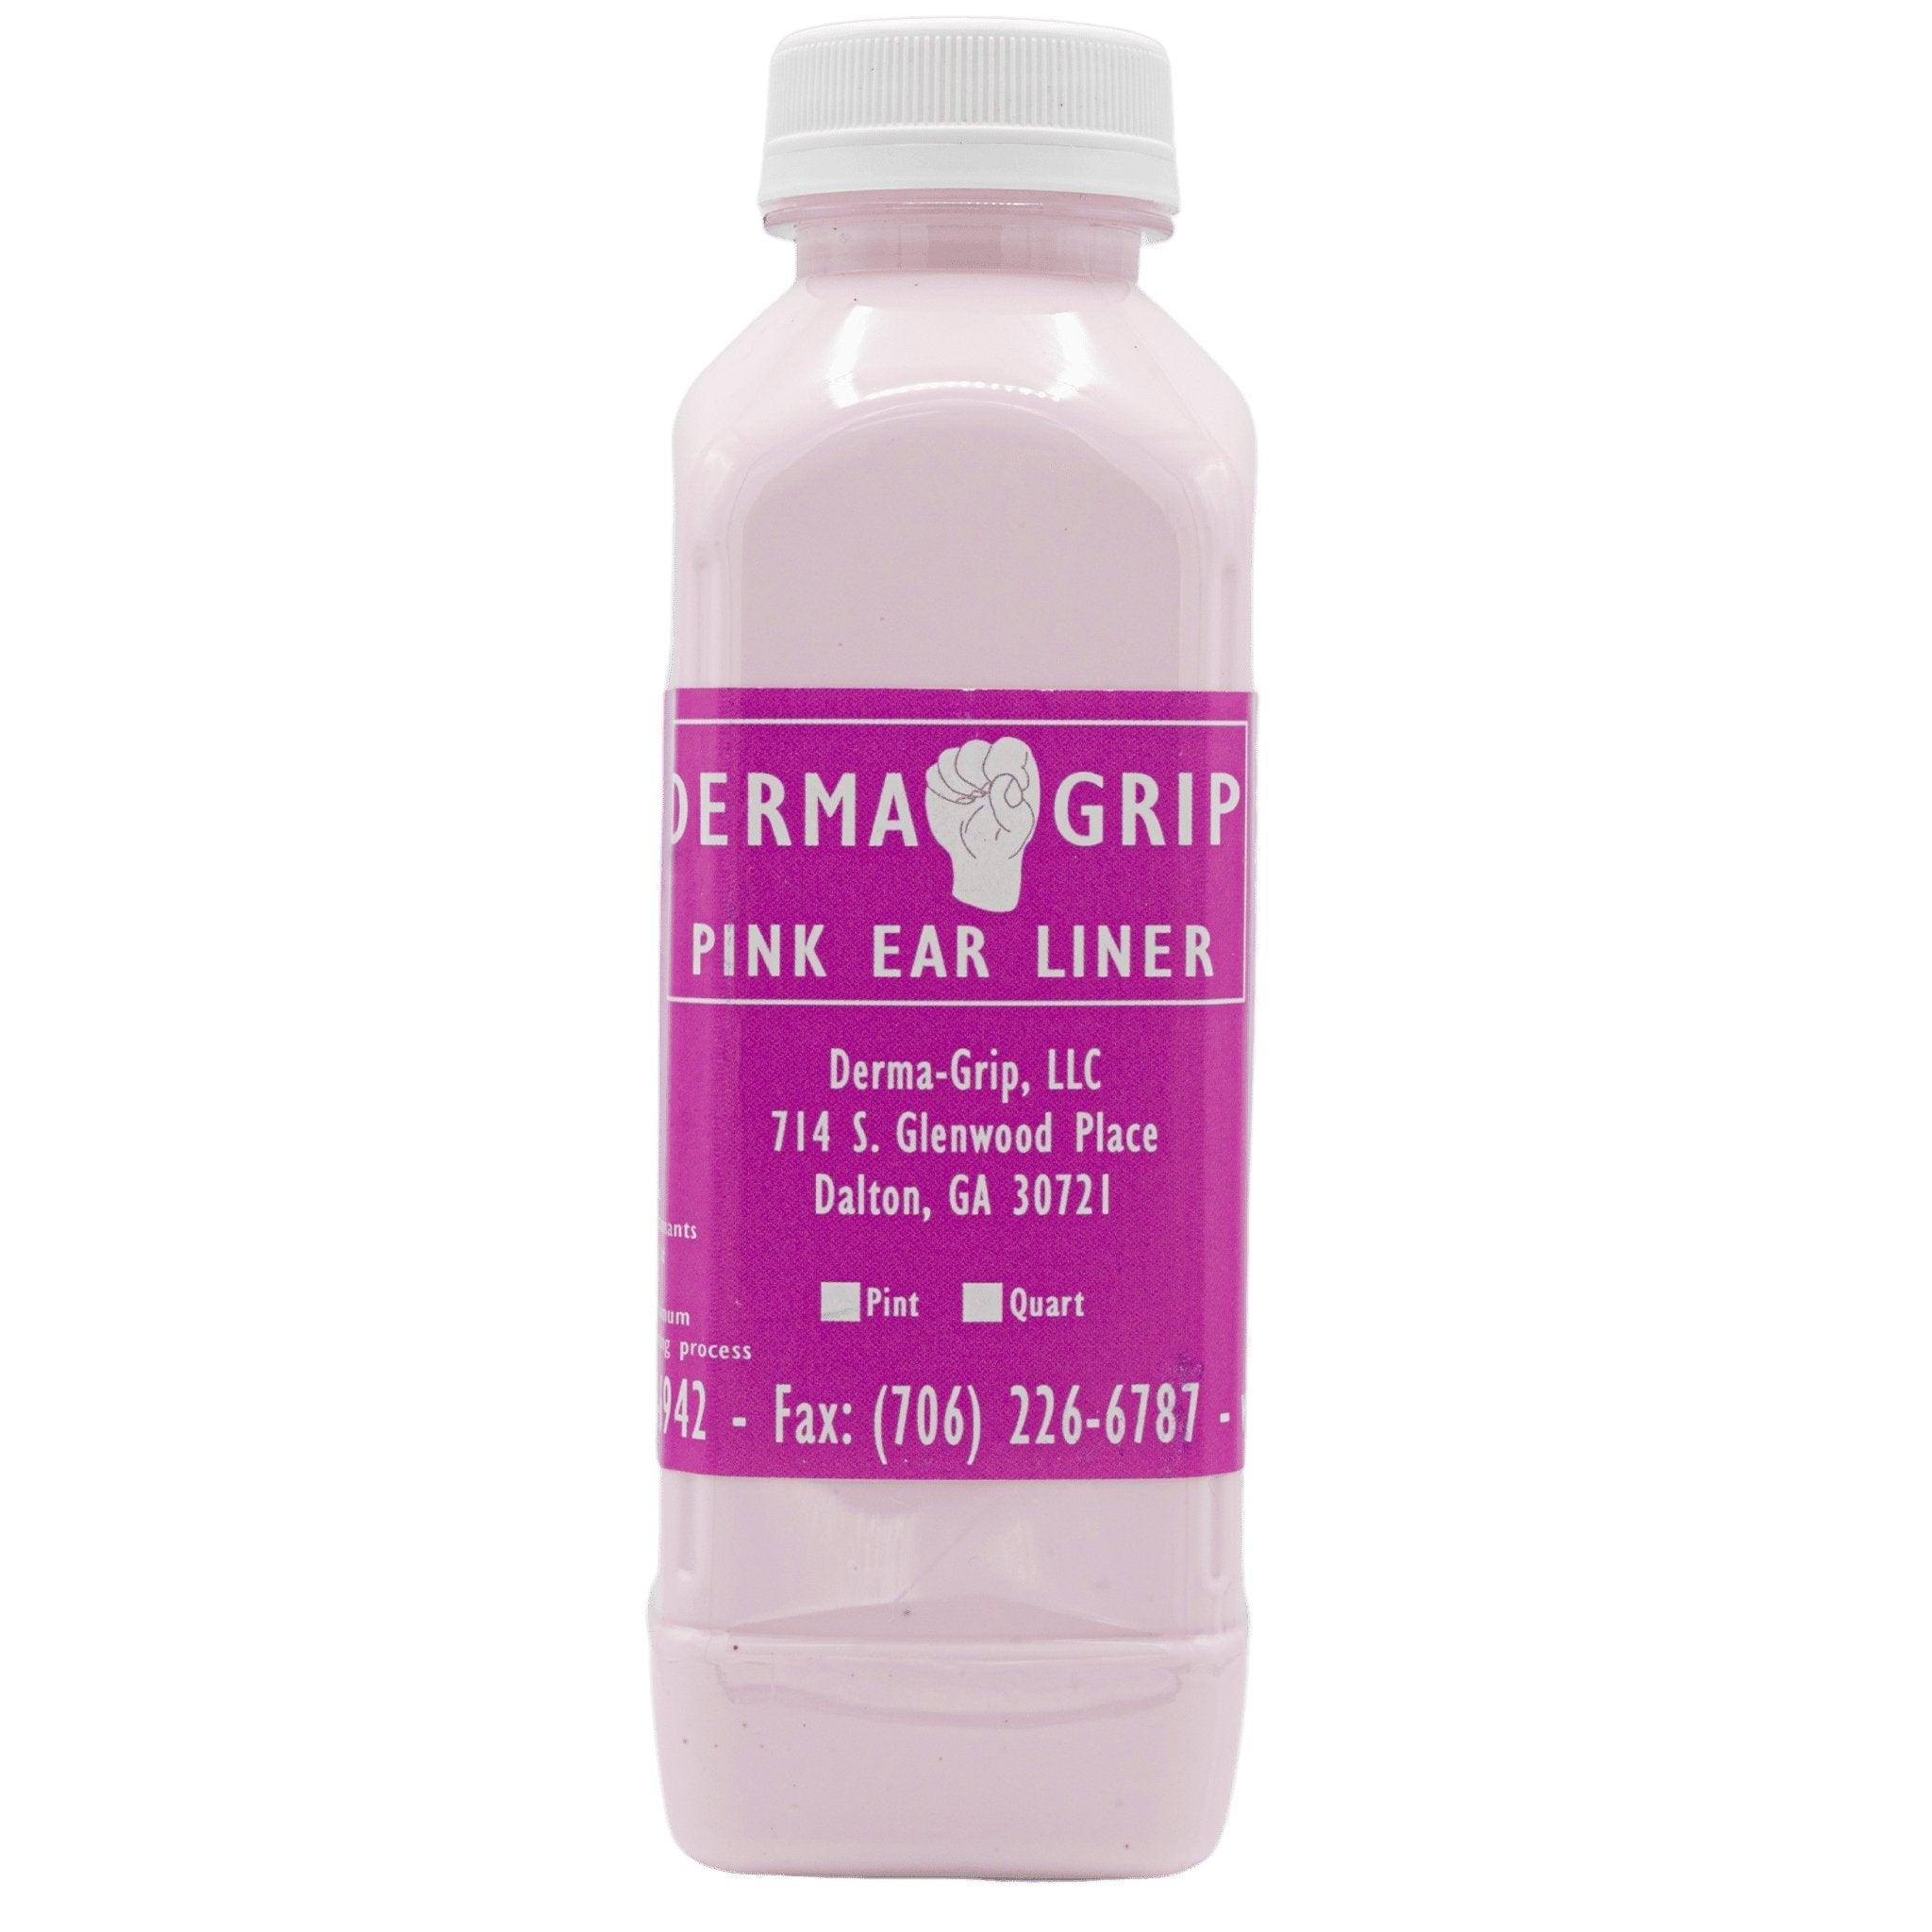 Pink Earliner Adhesive by Derma Grip - Matuska Taxidermy Supply Company